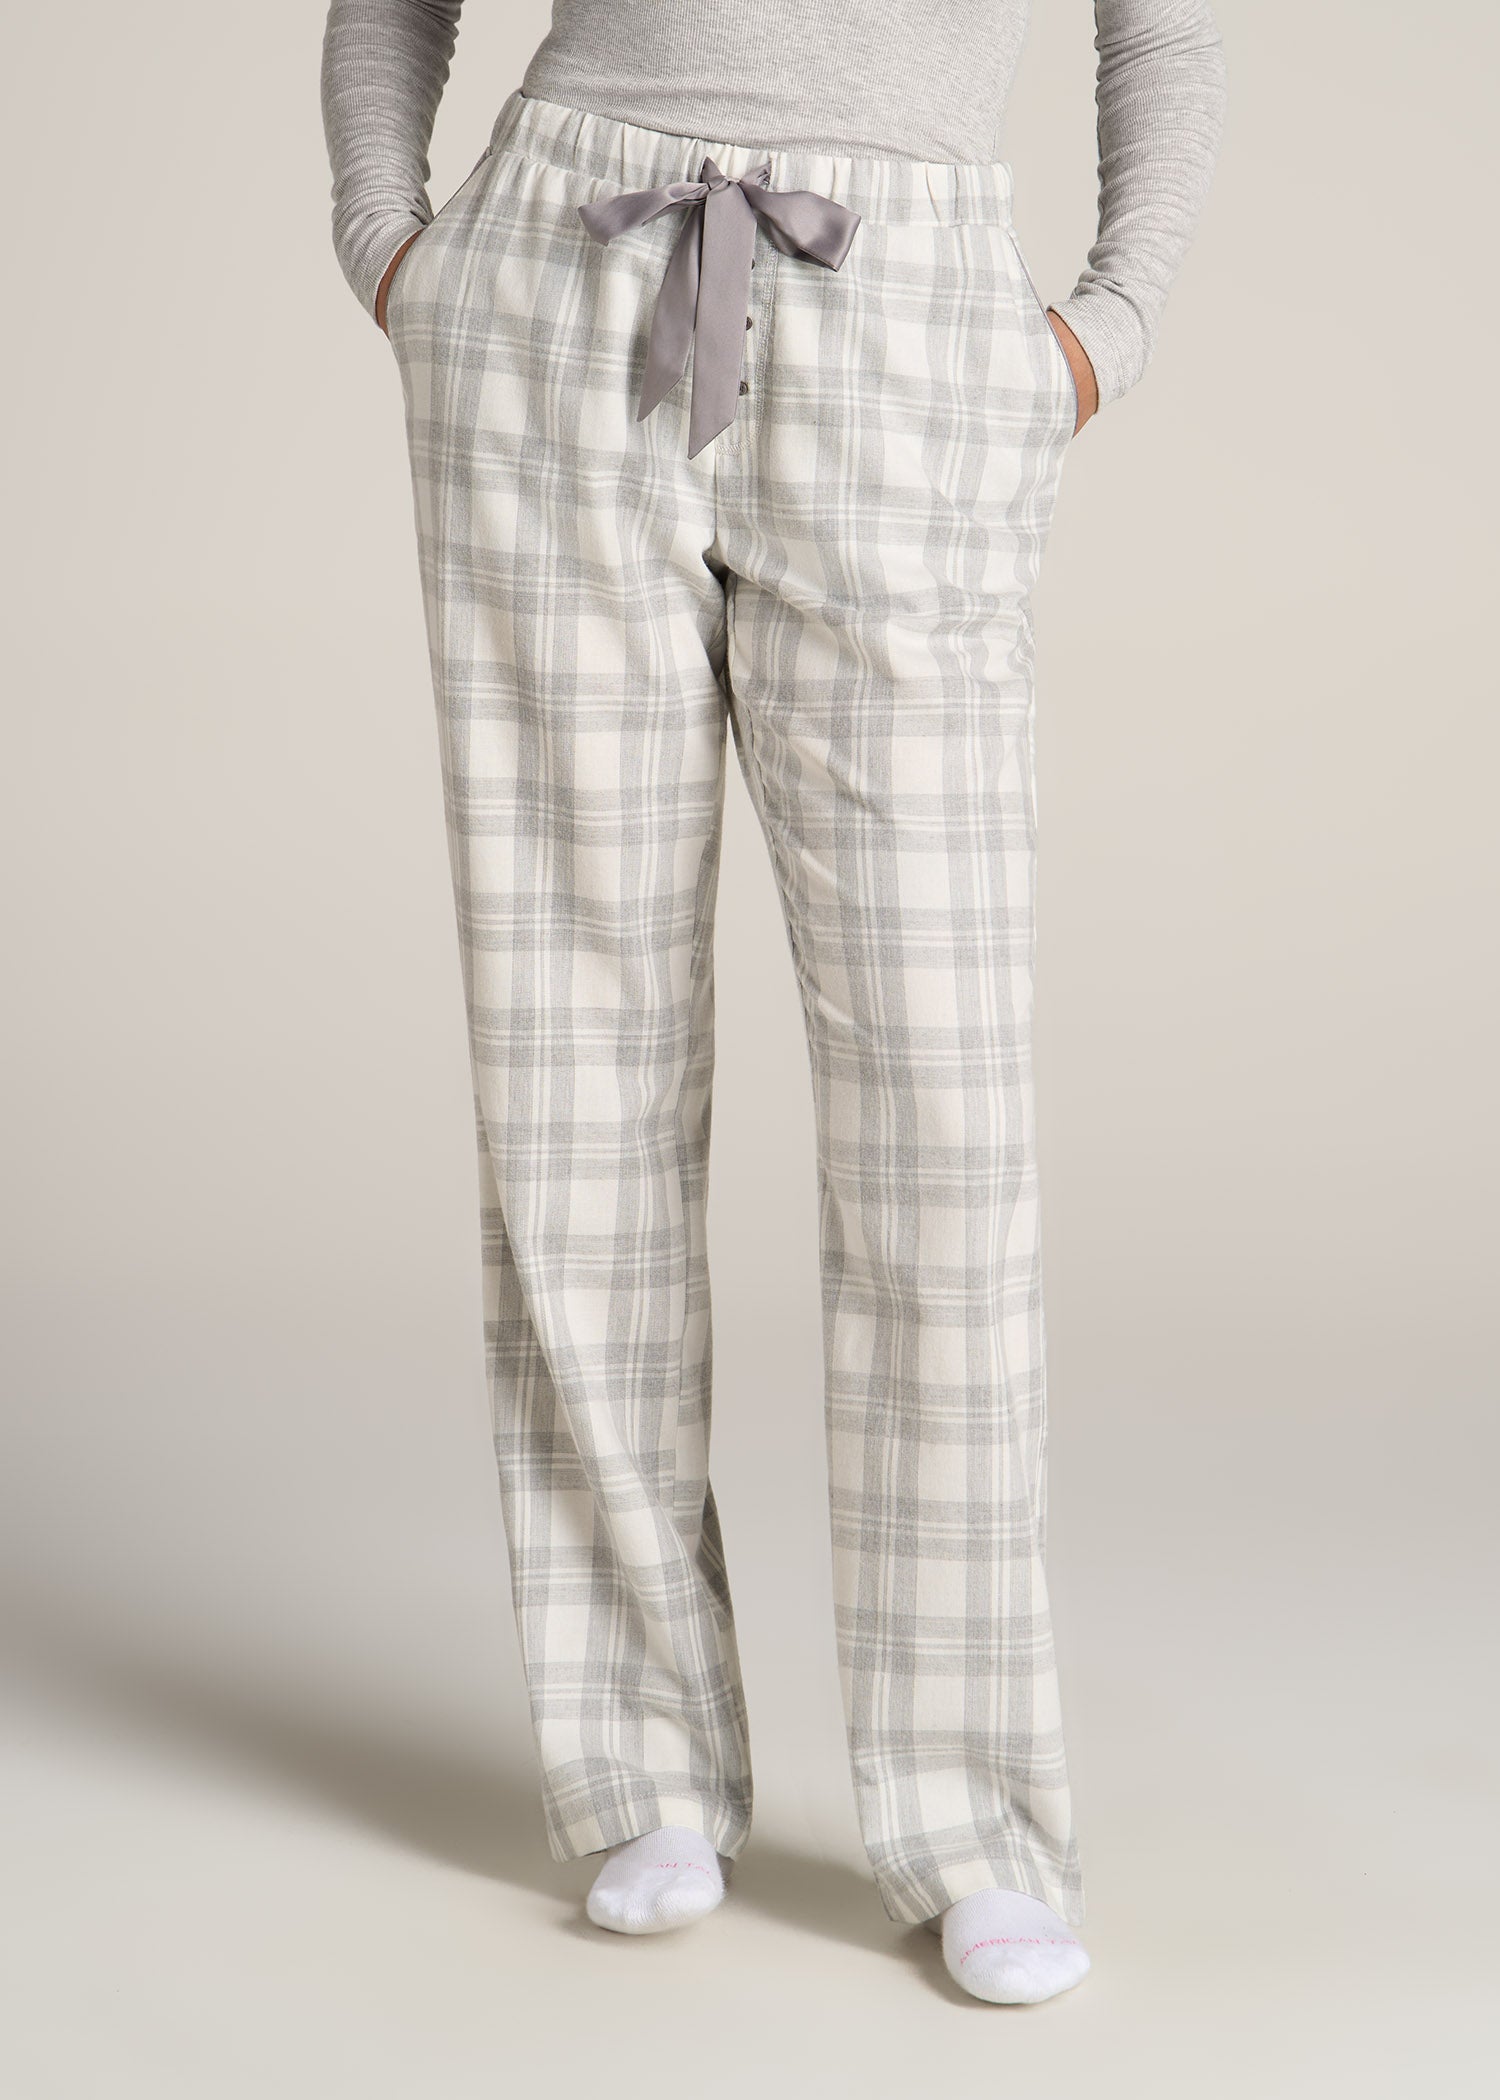 Pajama Pants - I